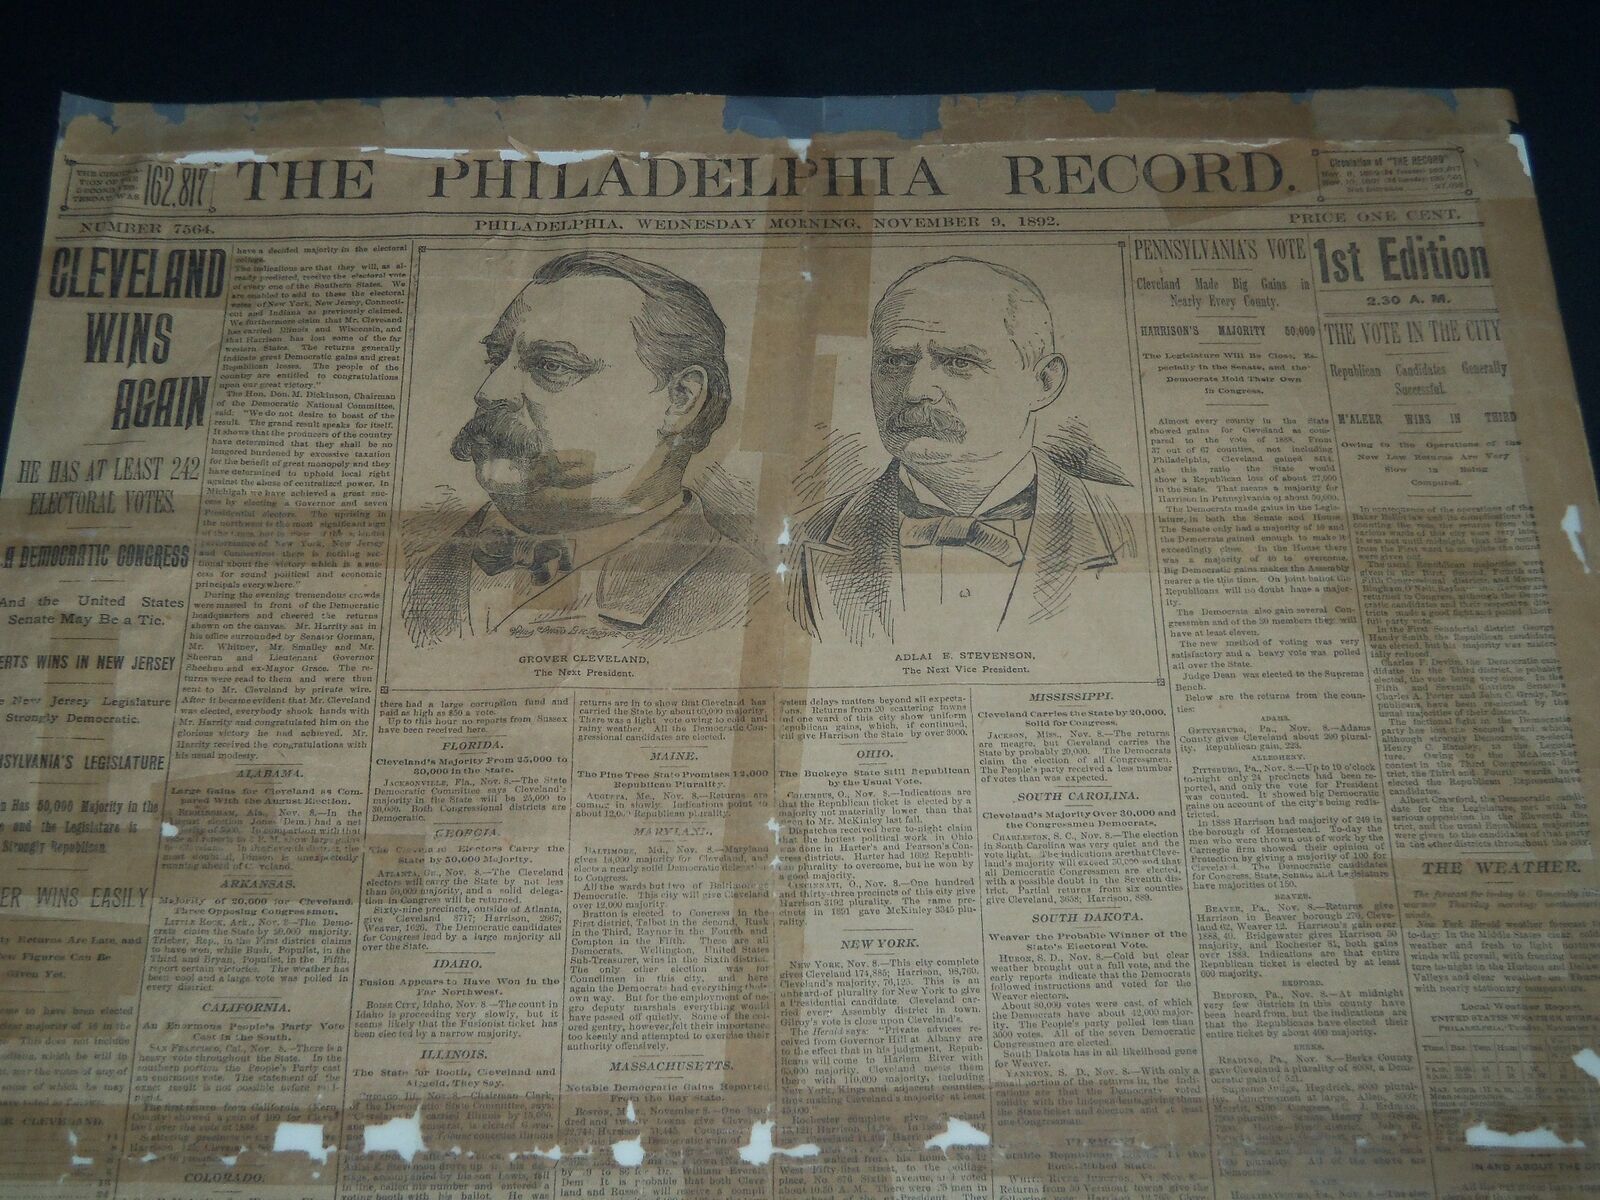 1892 NOVEMBER 9 PHILADELPHIA RECORD NEWSPAPER - CLEVELAND WINS AGAIN - NT 7383